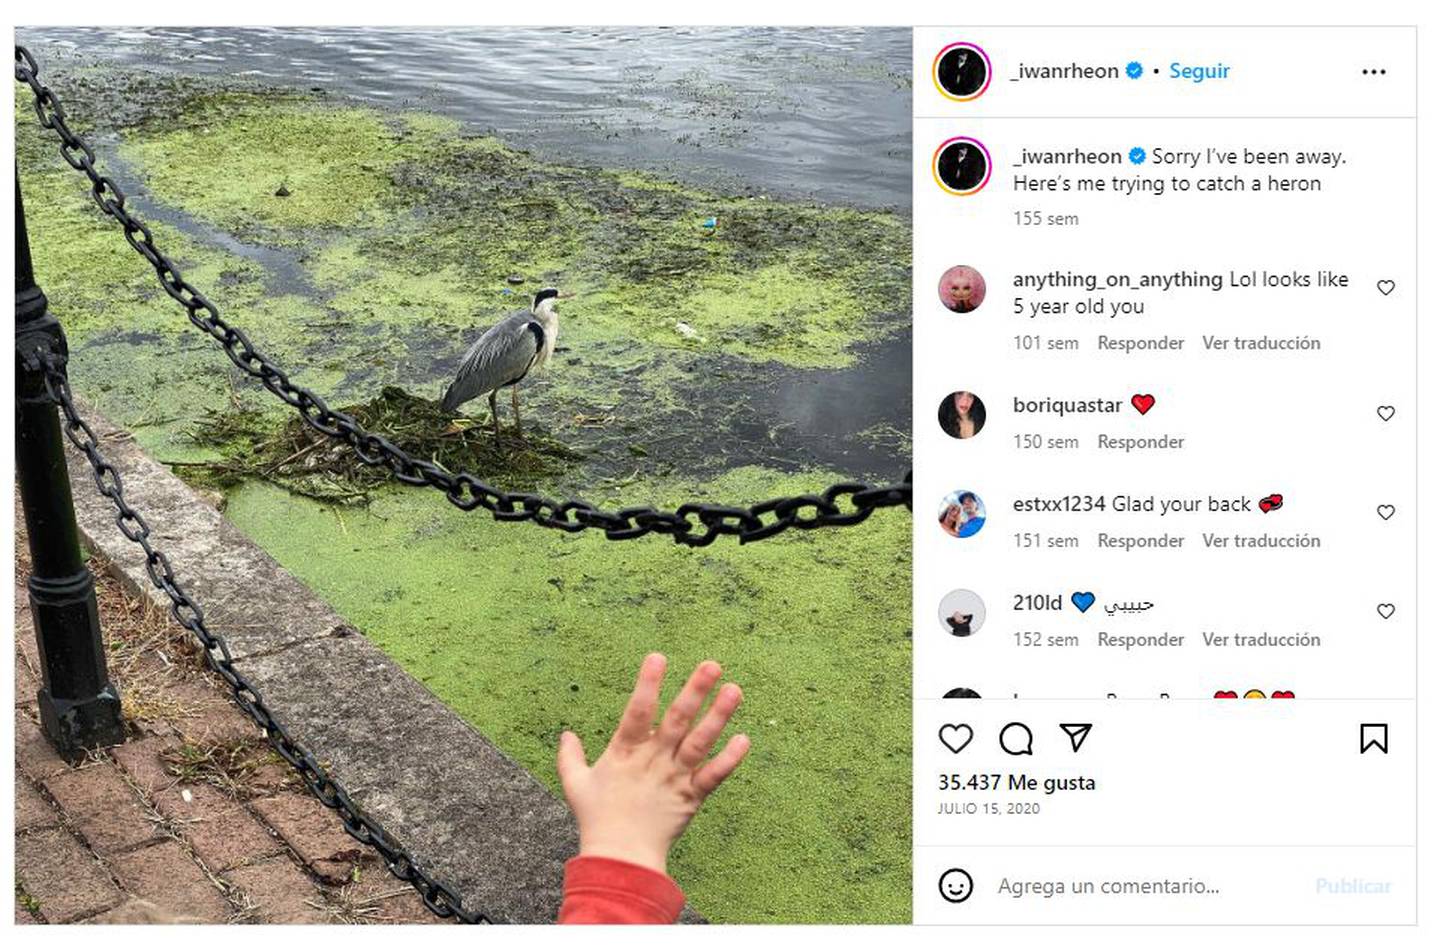 Iwan Rheon showed off his son's hand on Instagram